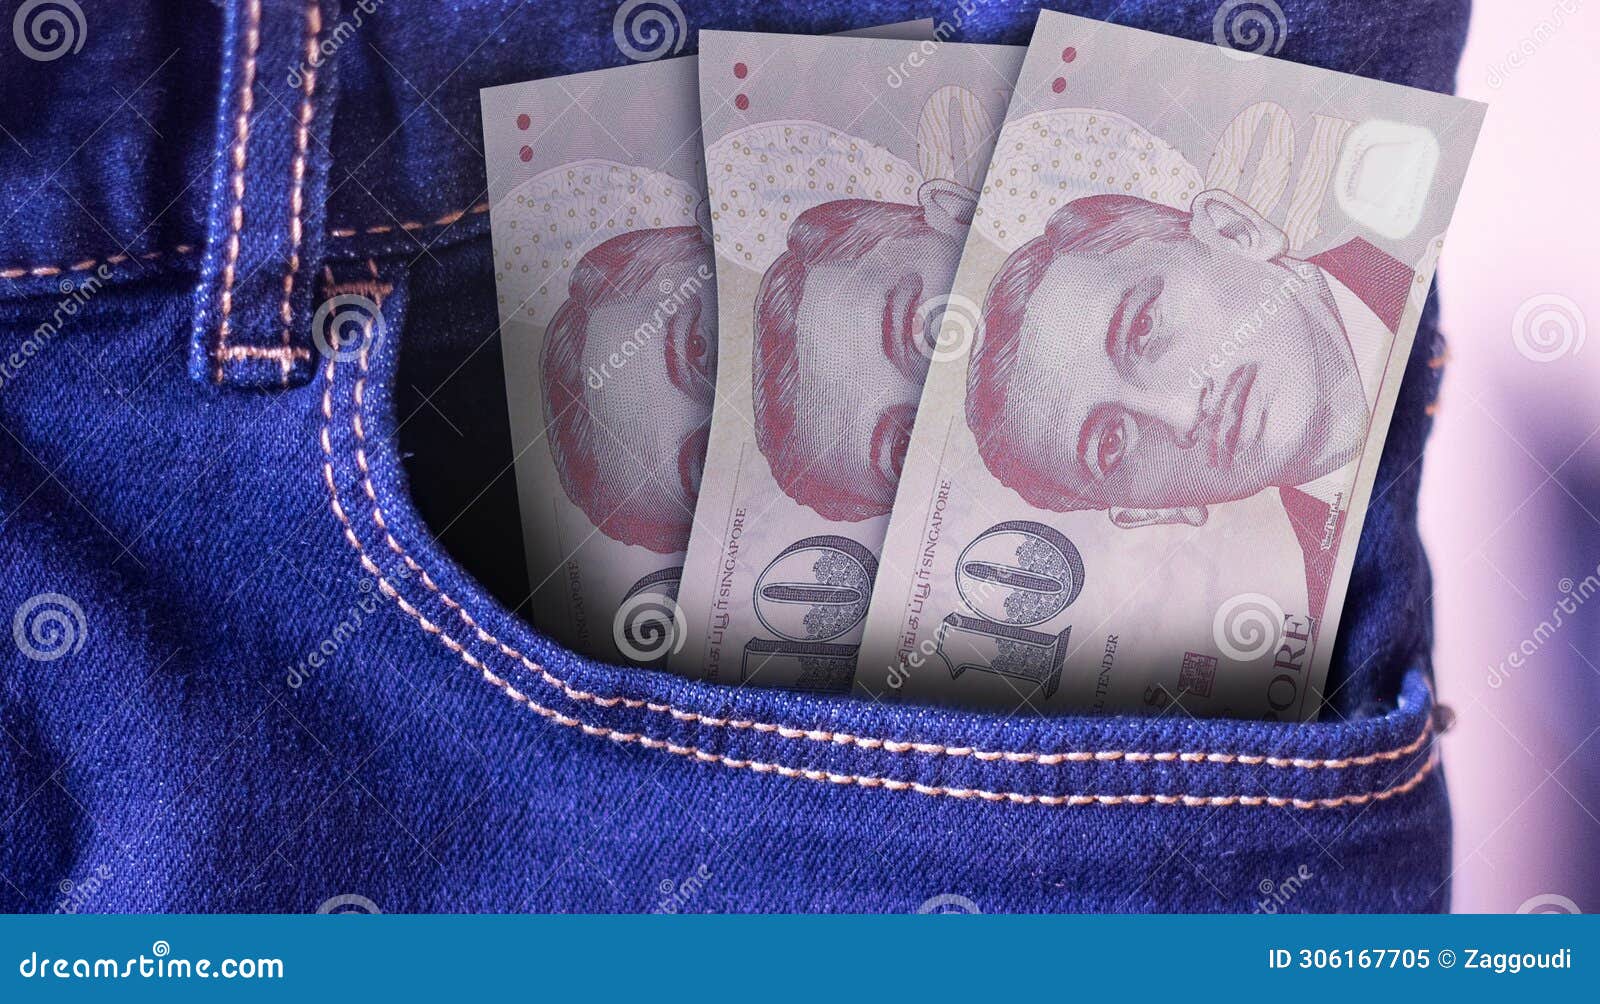 sierra leone 5000 leones banknotes in pocket of jeans